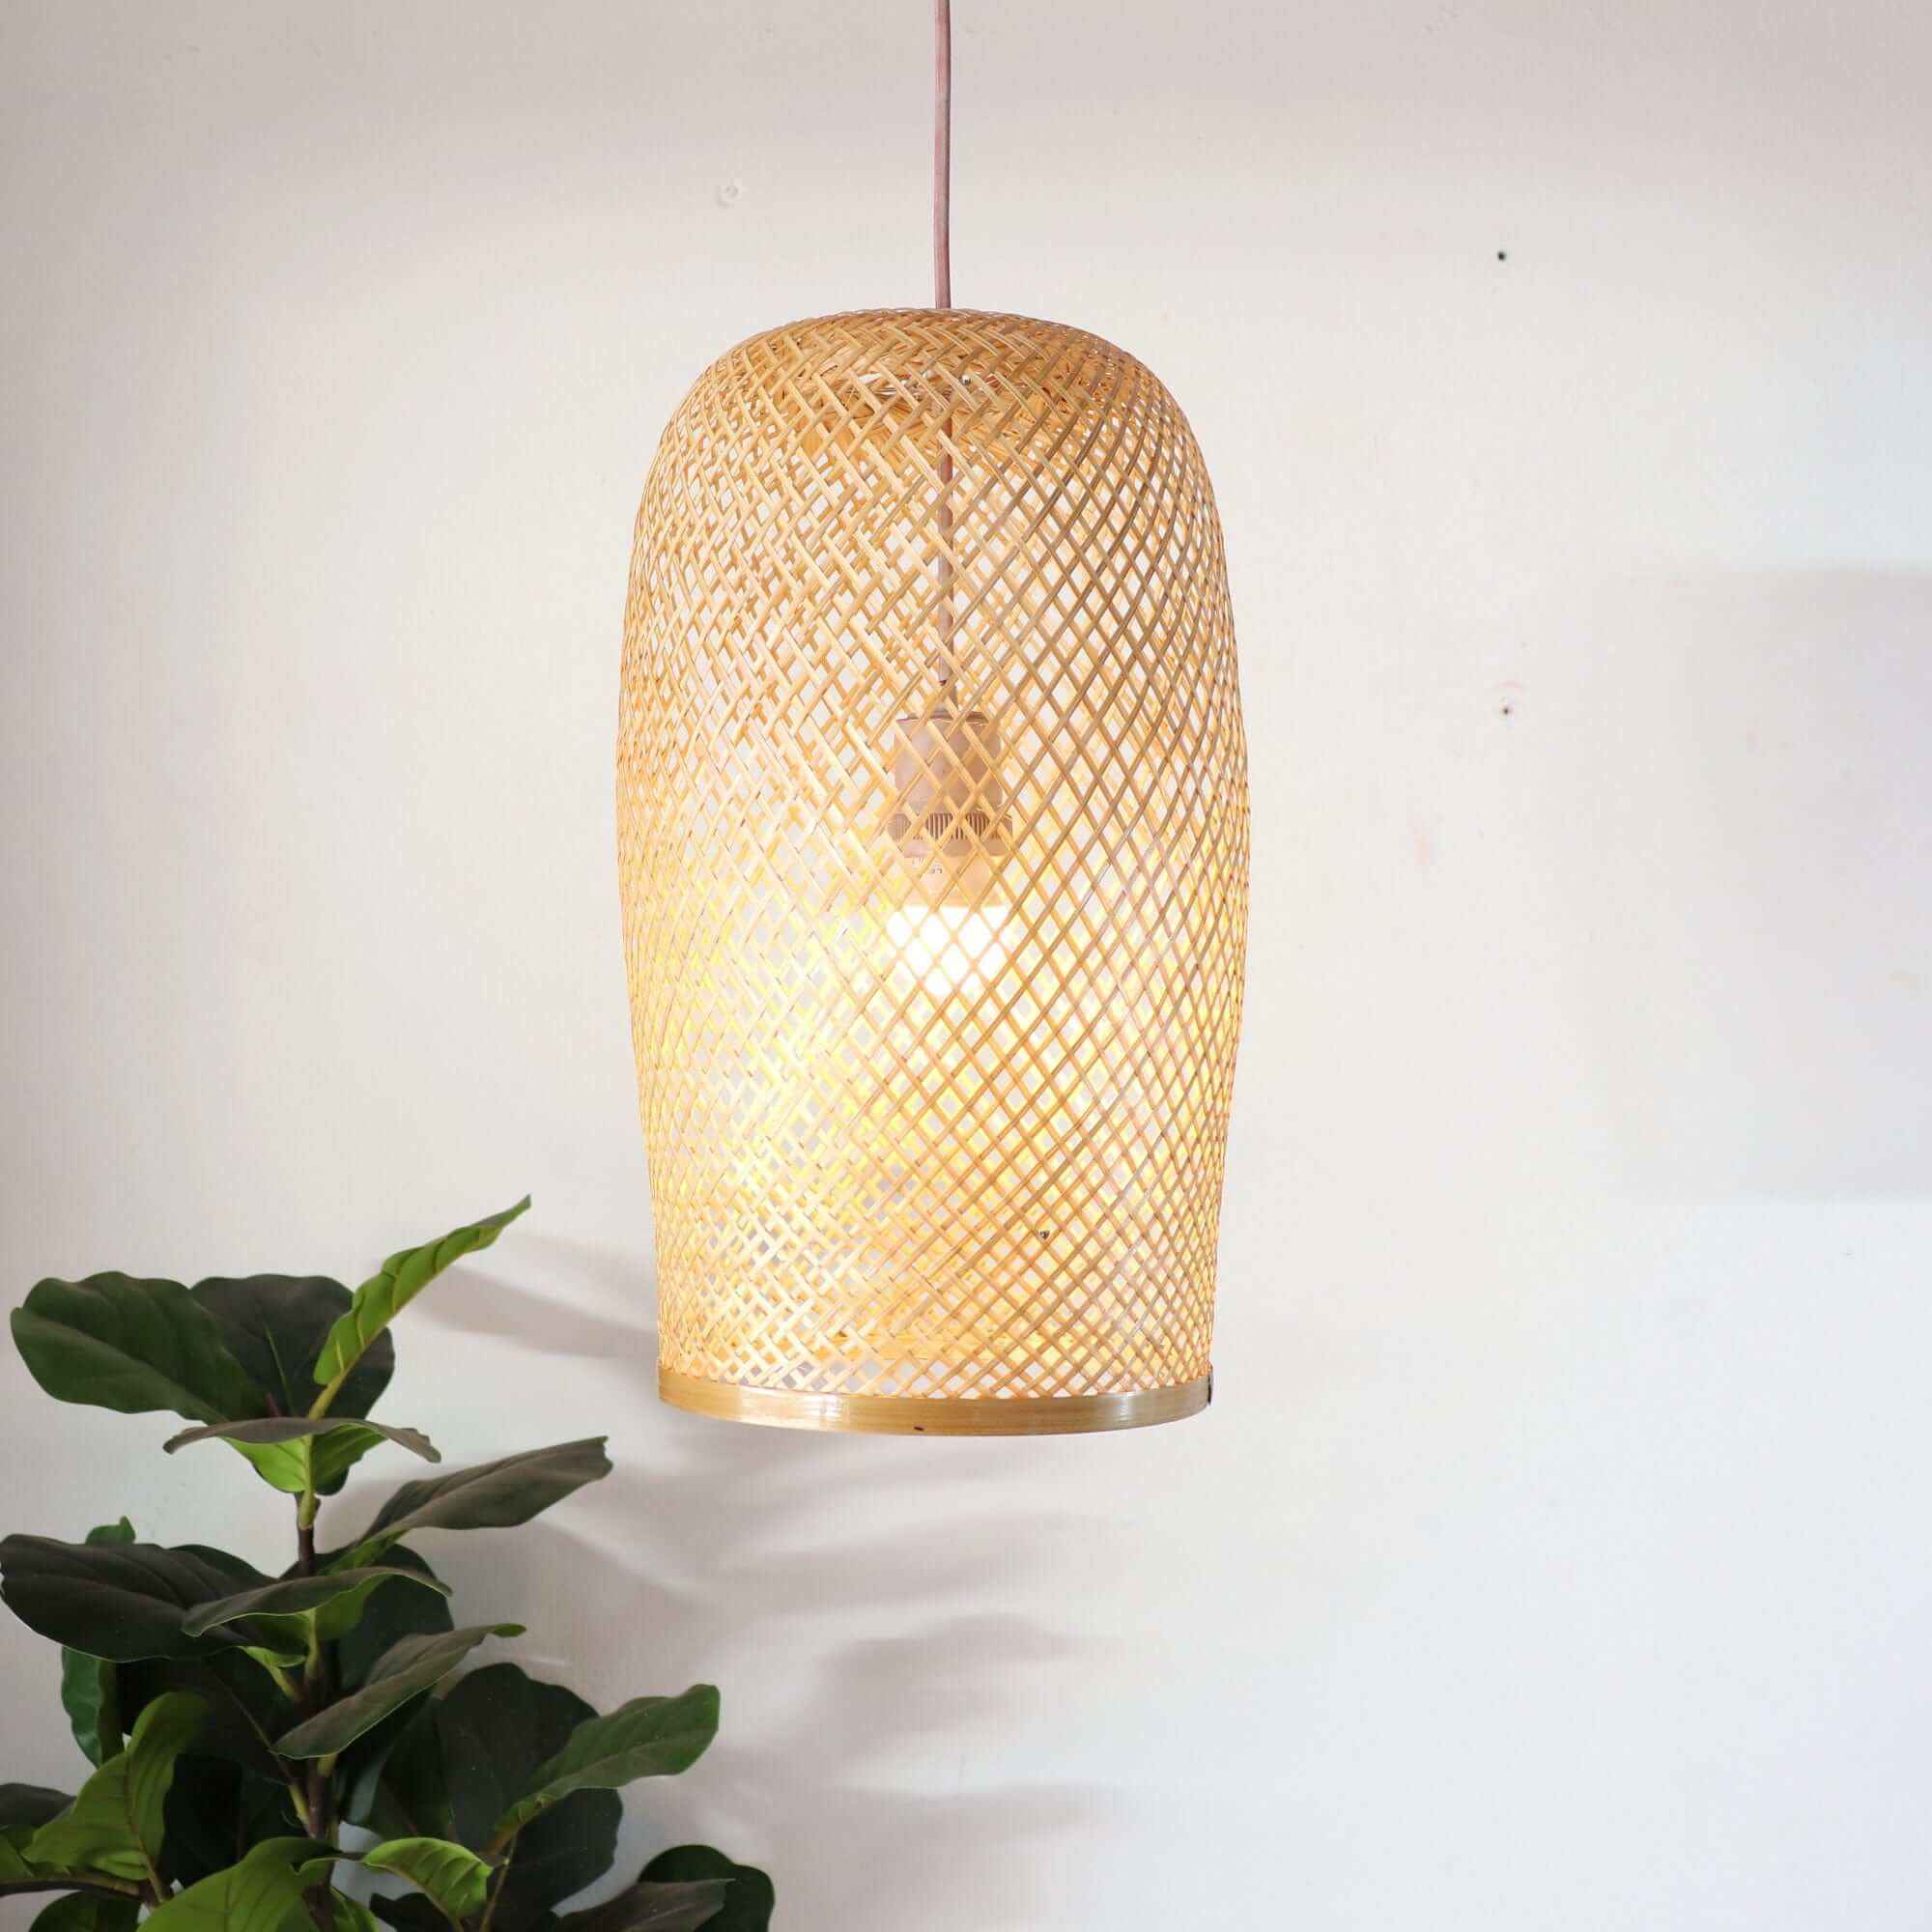 PUNNA - Bamboo Pendant Light Shade